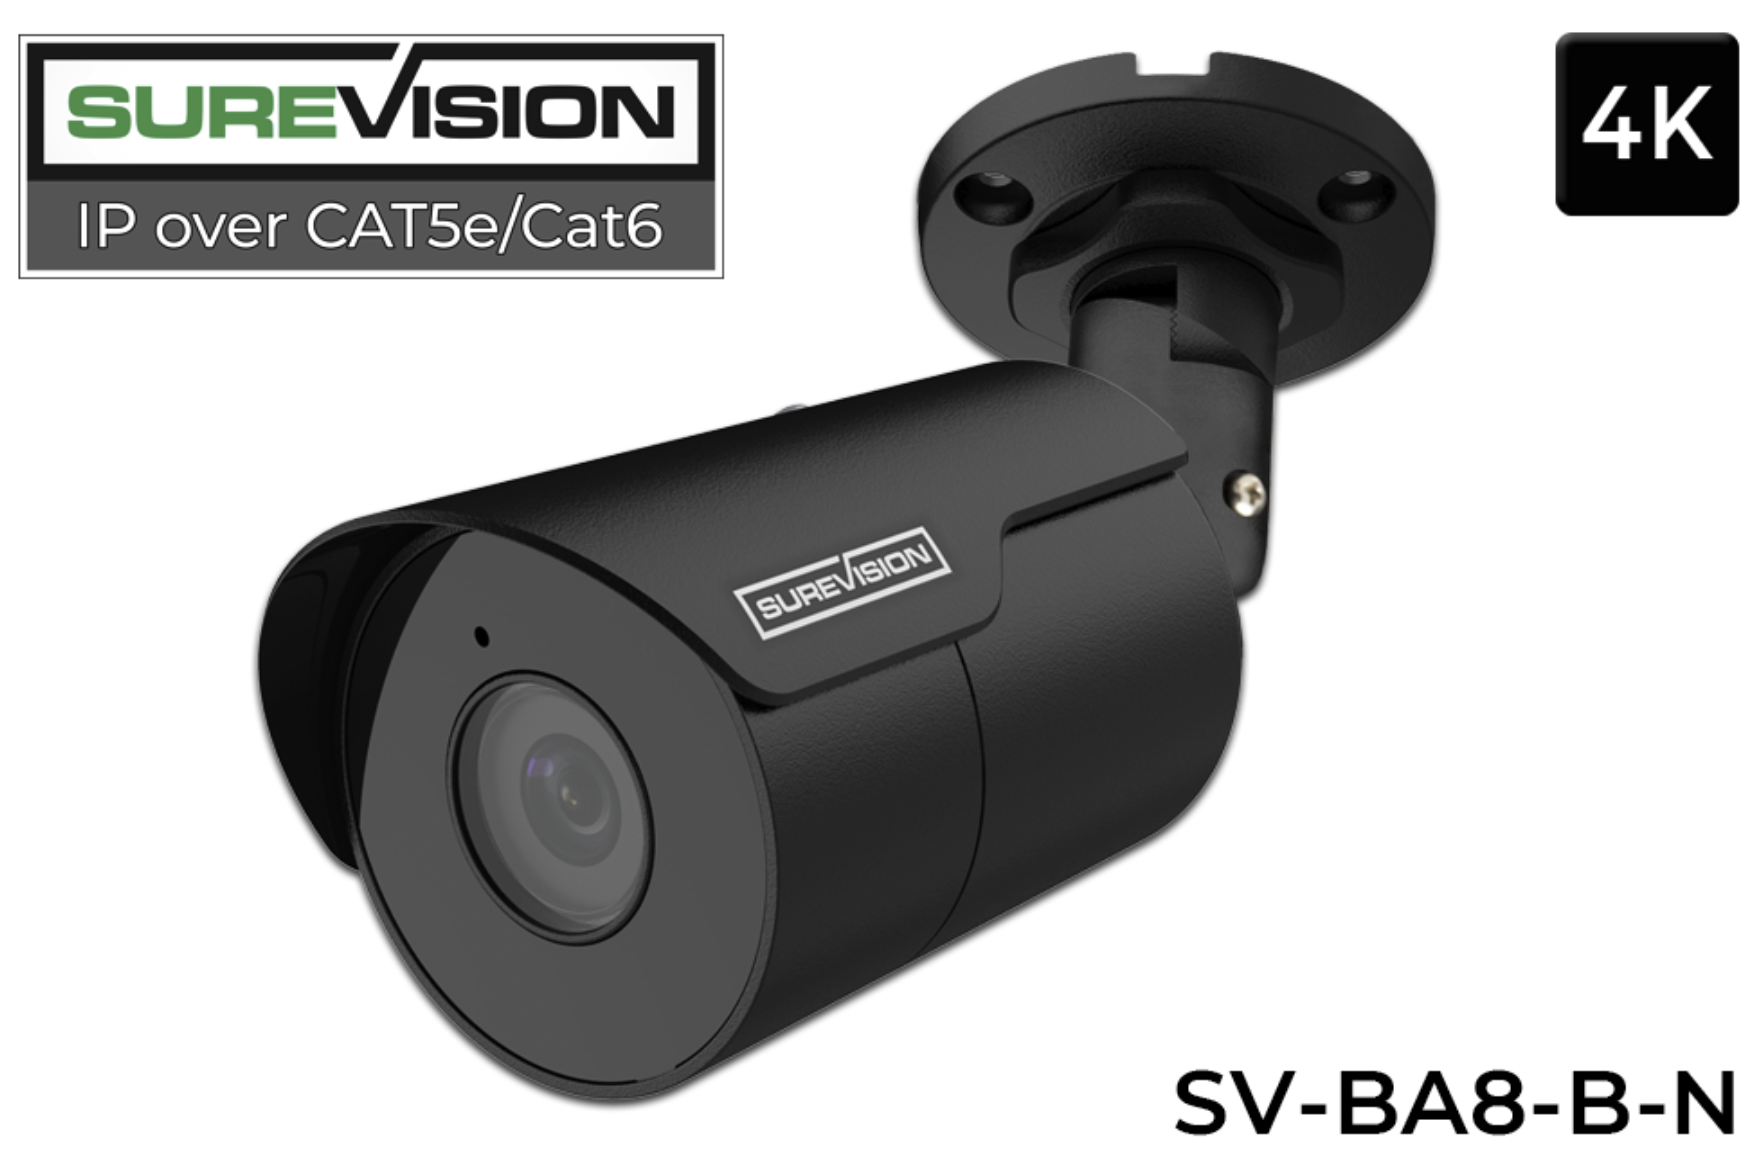 4K Security Cameras | CCTV Security Pros 